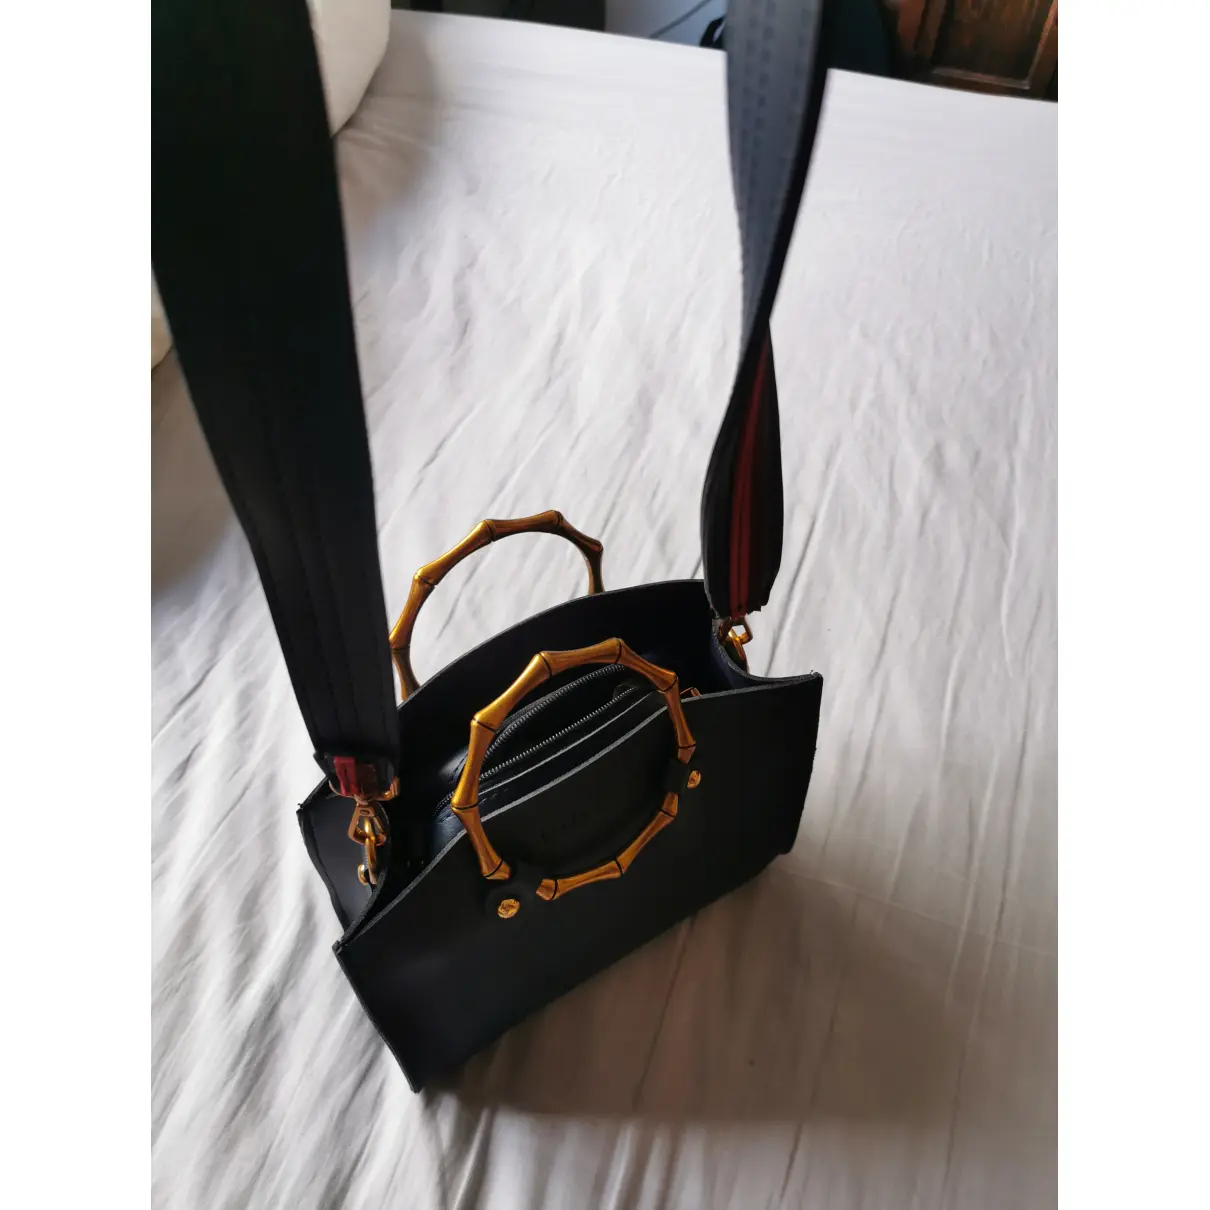 Leather handbag LAURA ASHLEY